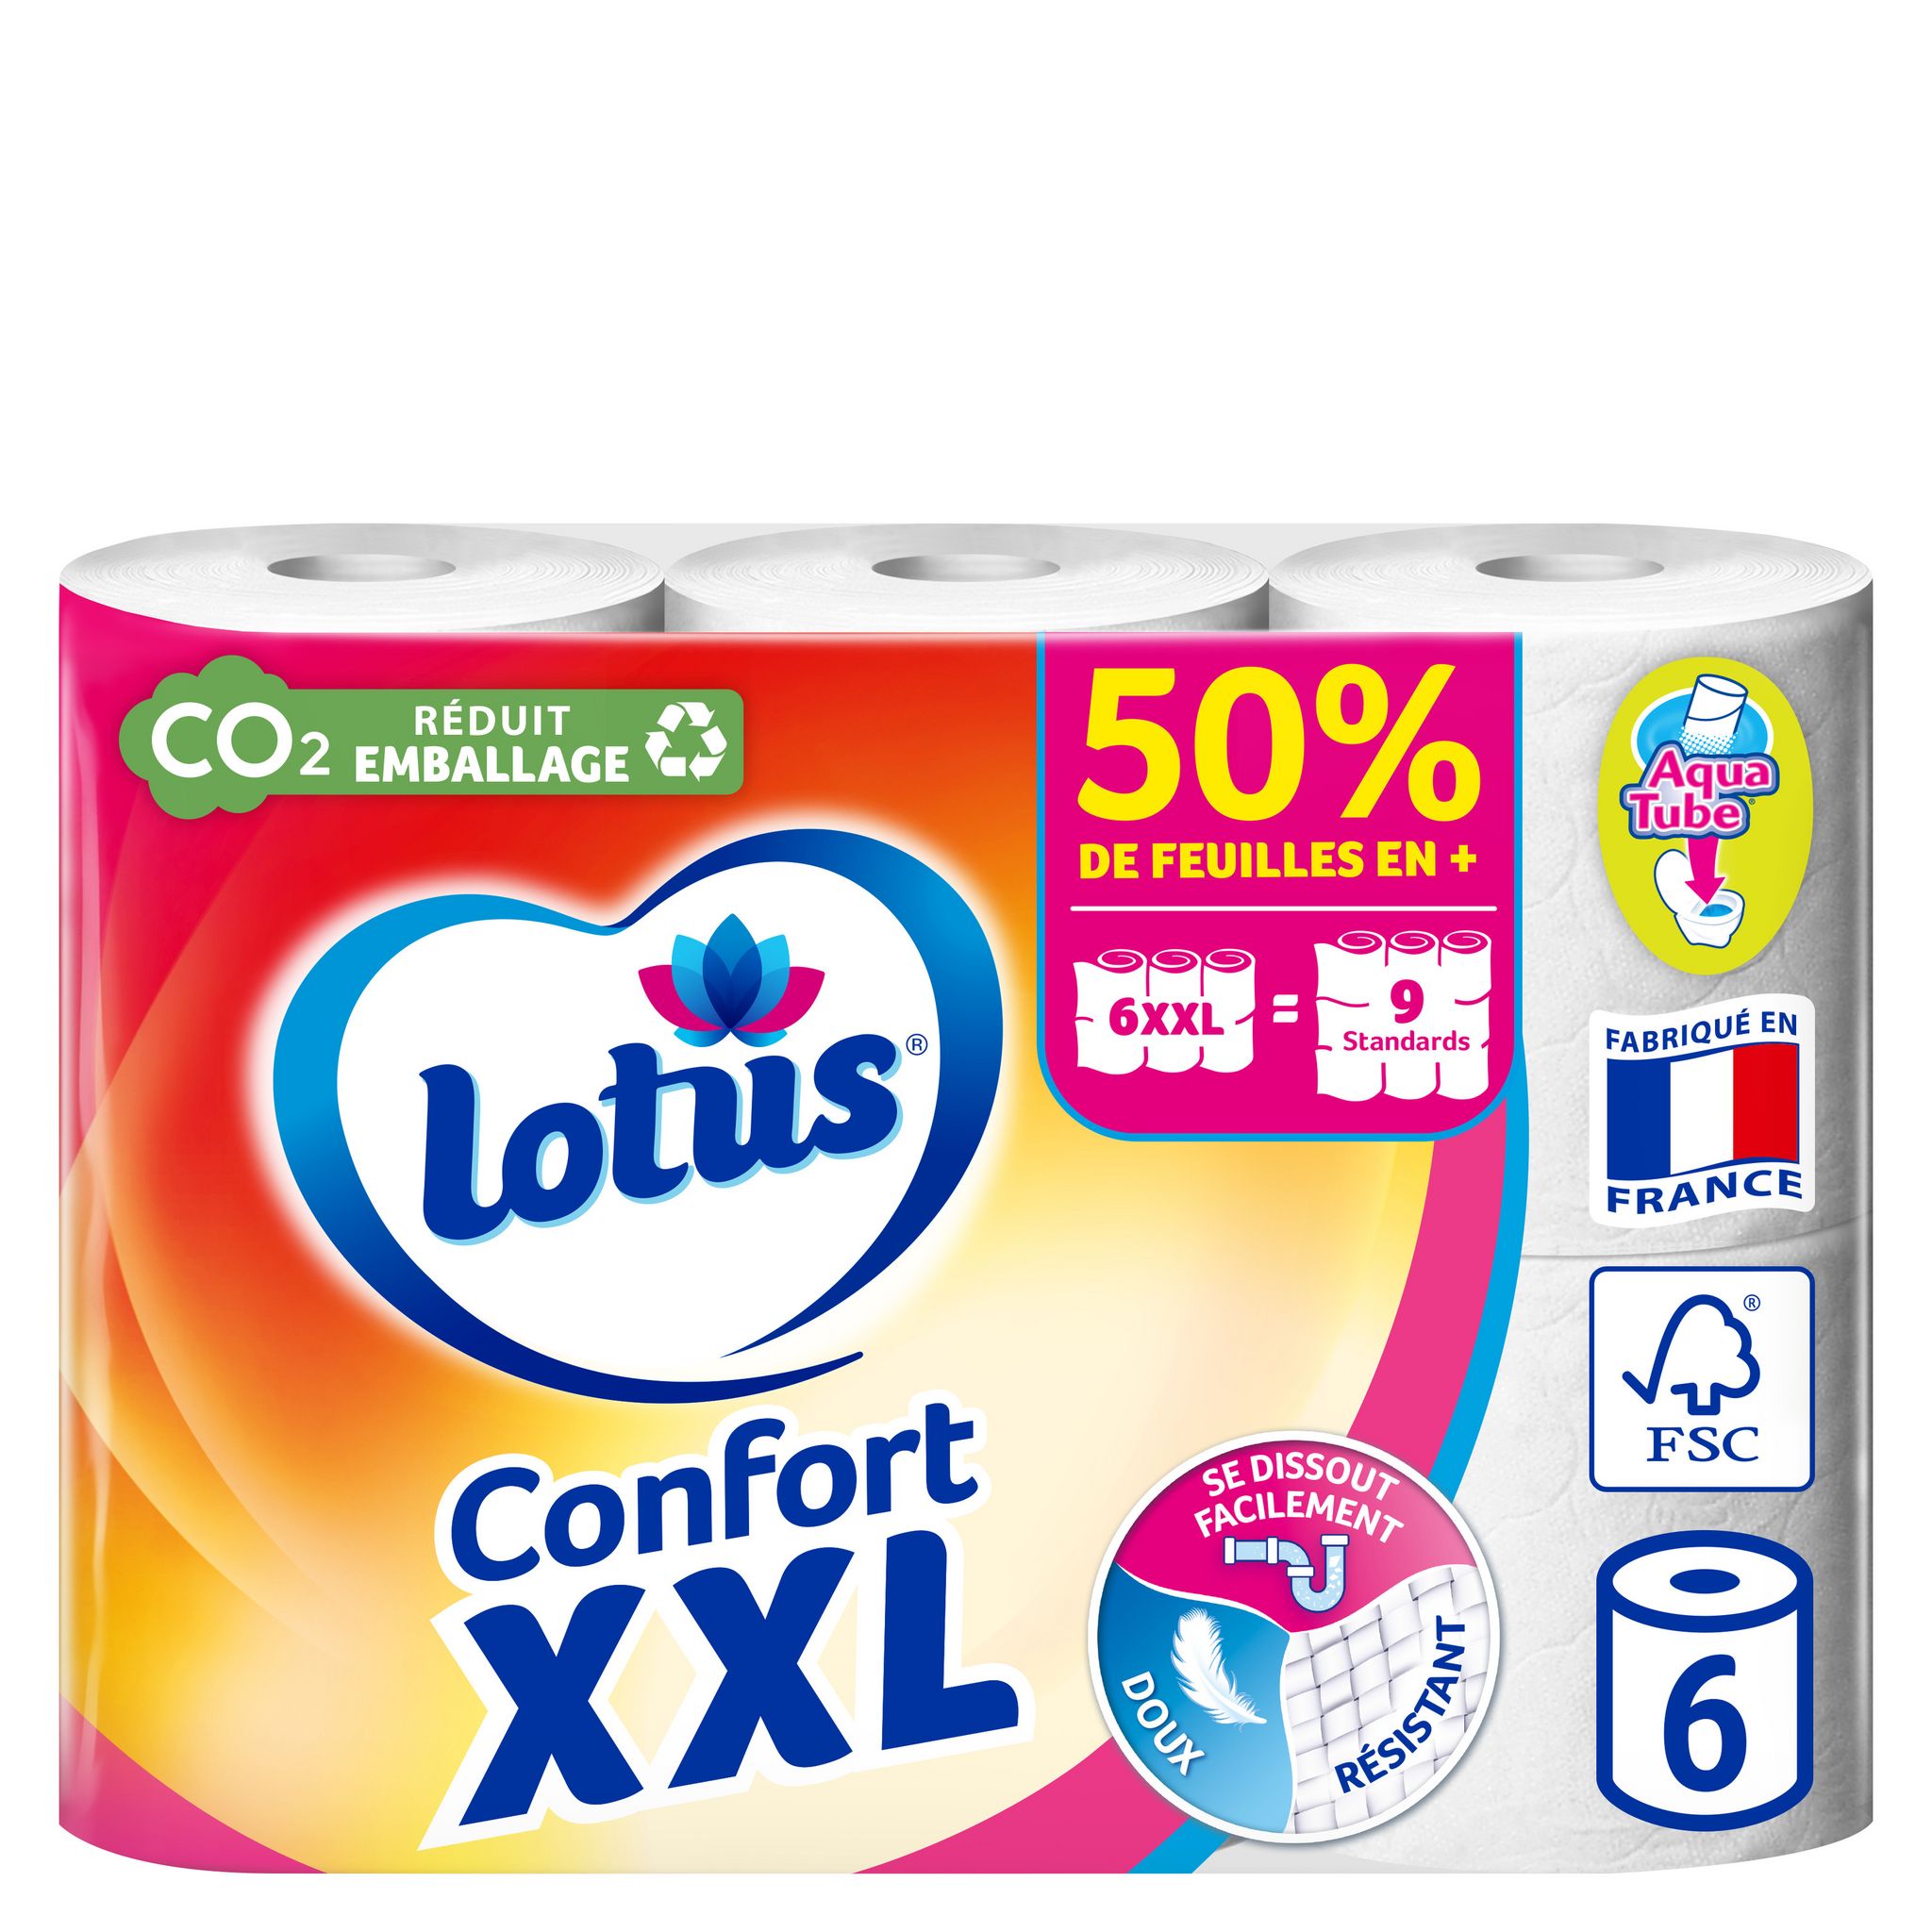 Lotus, Papier Toilette, Moltonel, 3-Plis, Eco, 9 pc